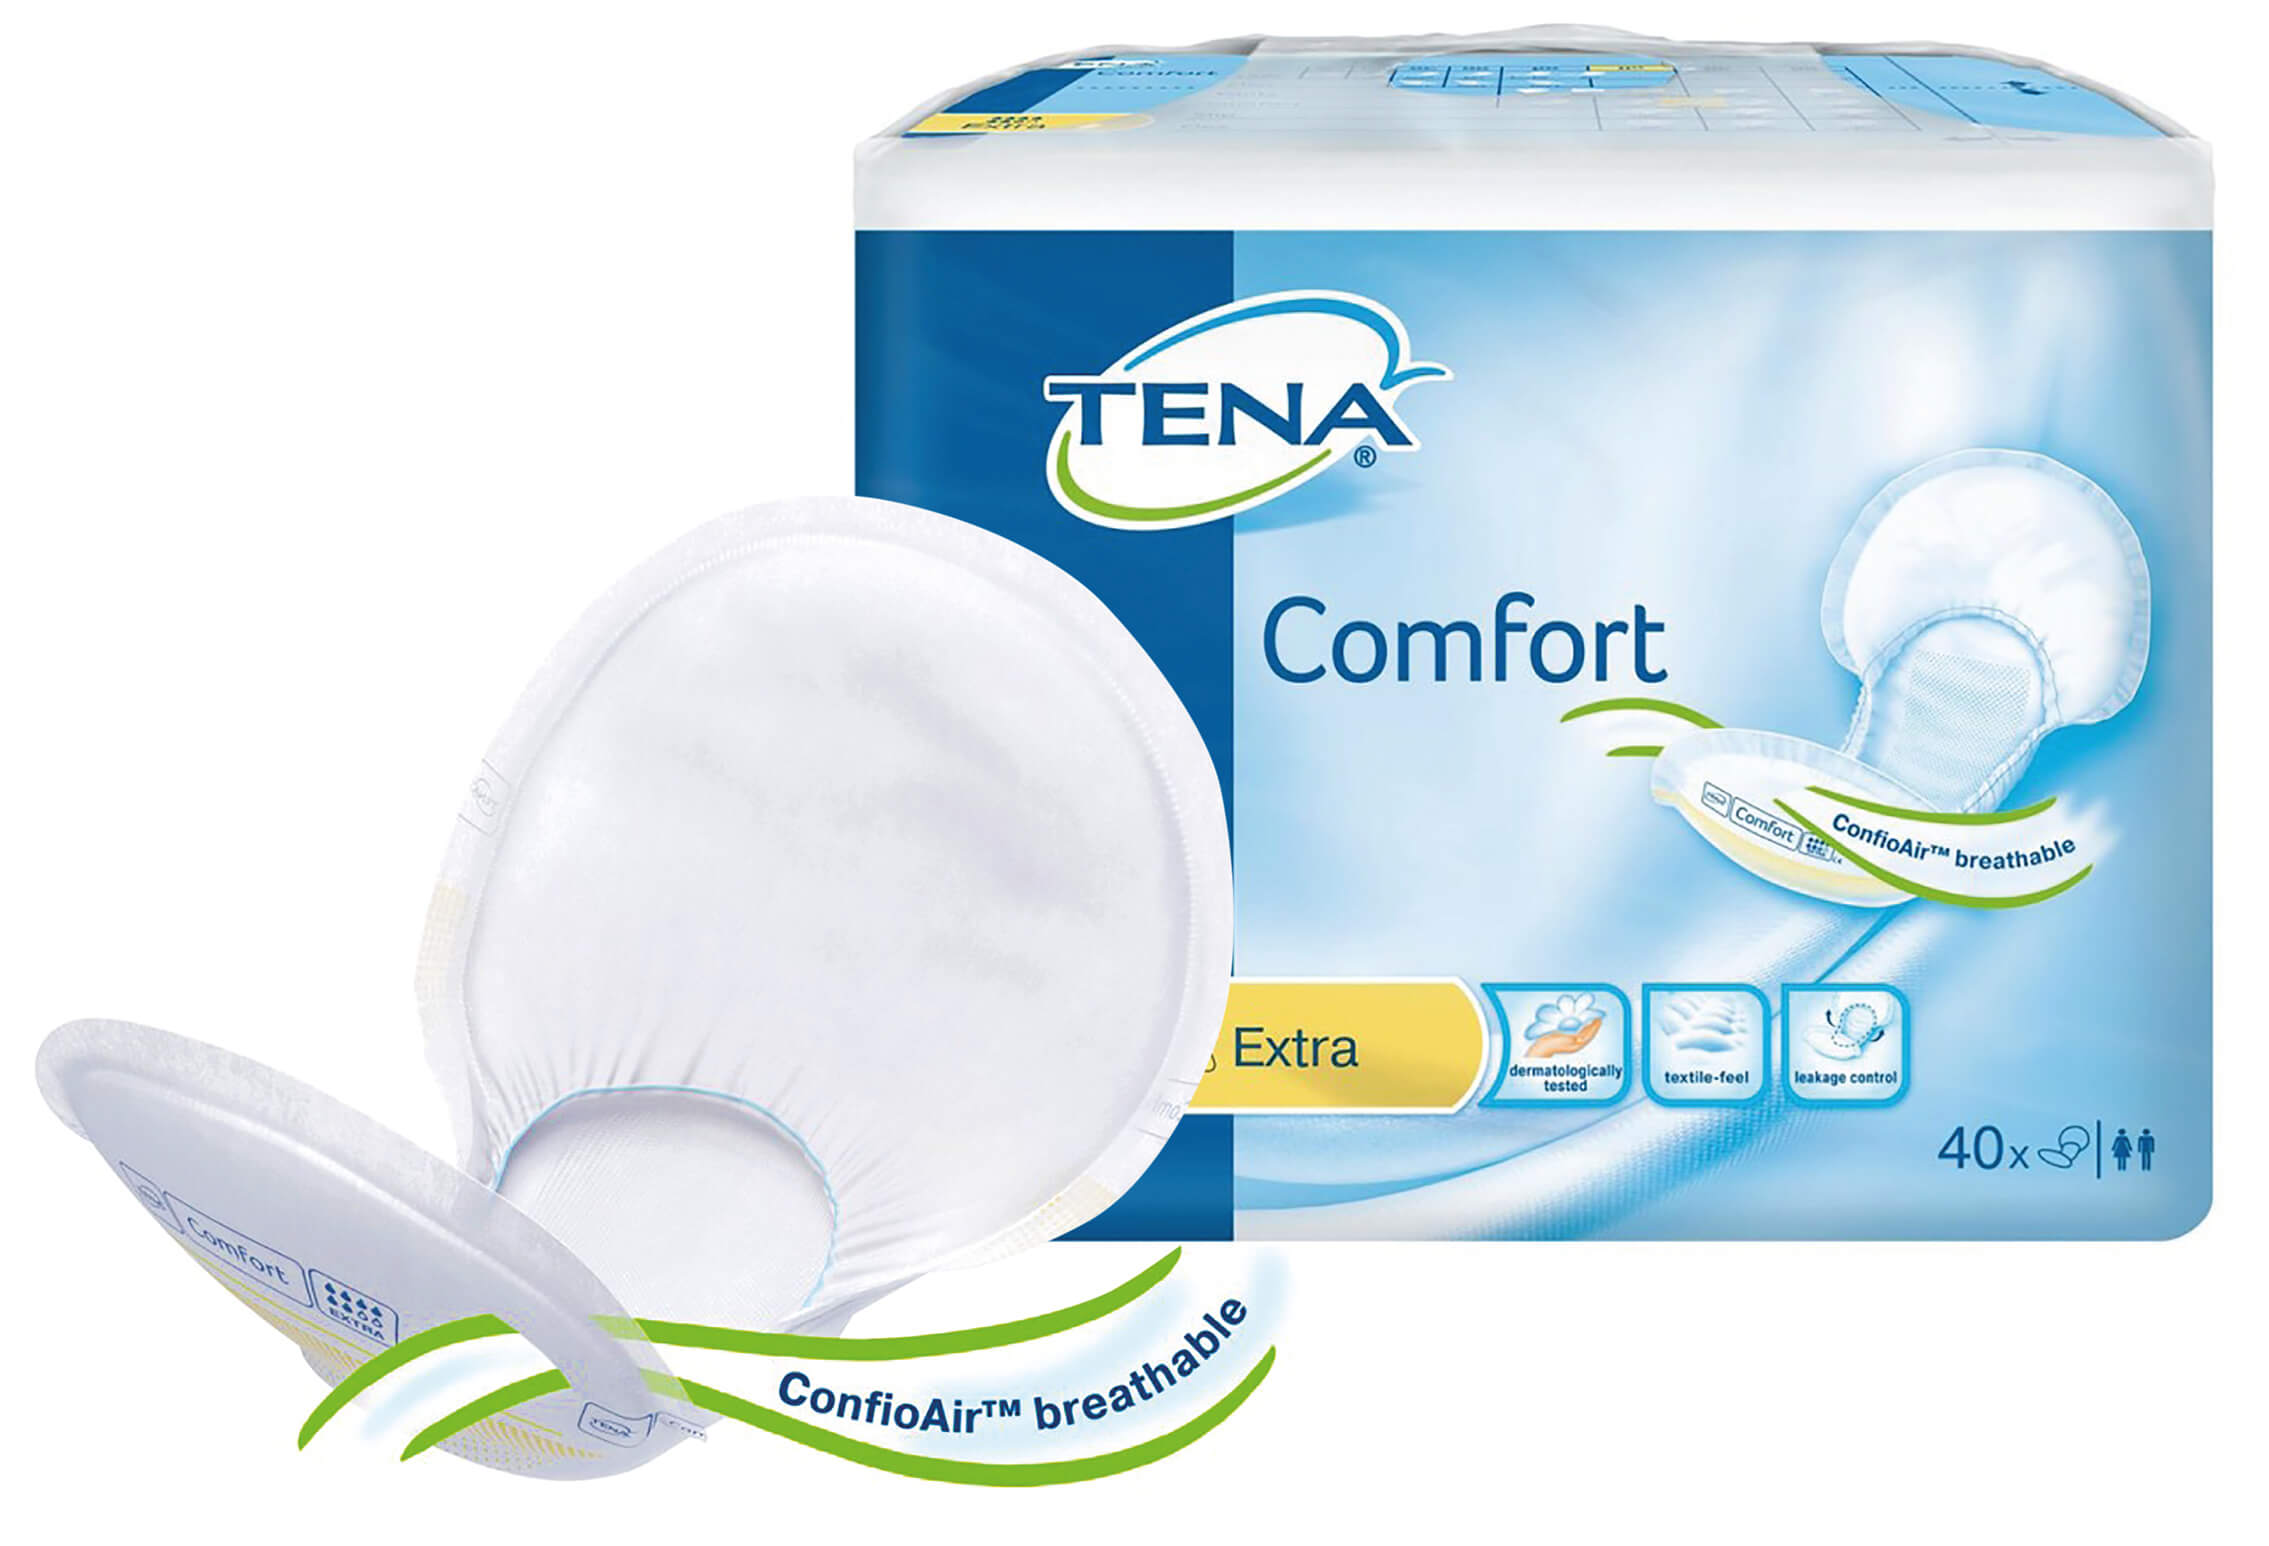 TENA Comfort Pads